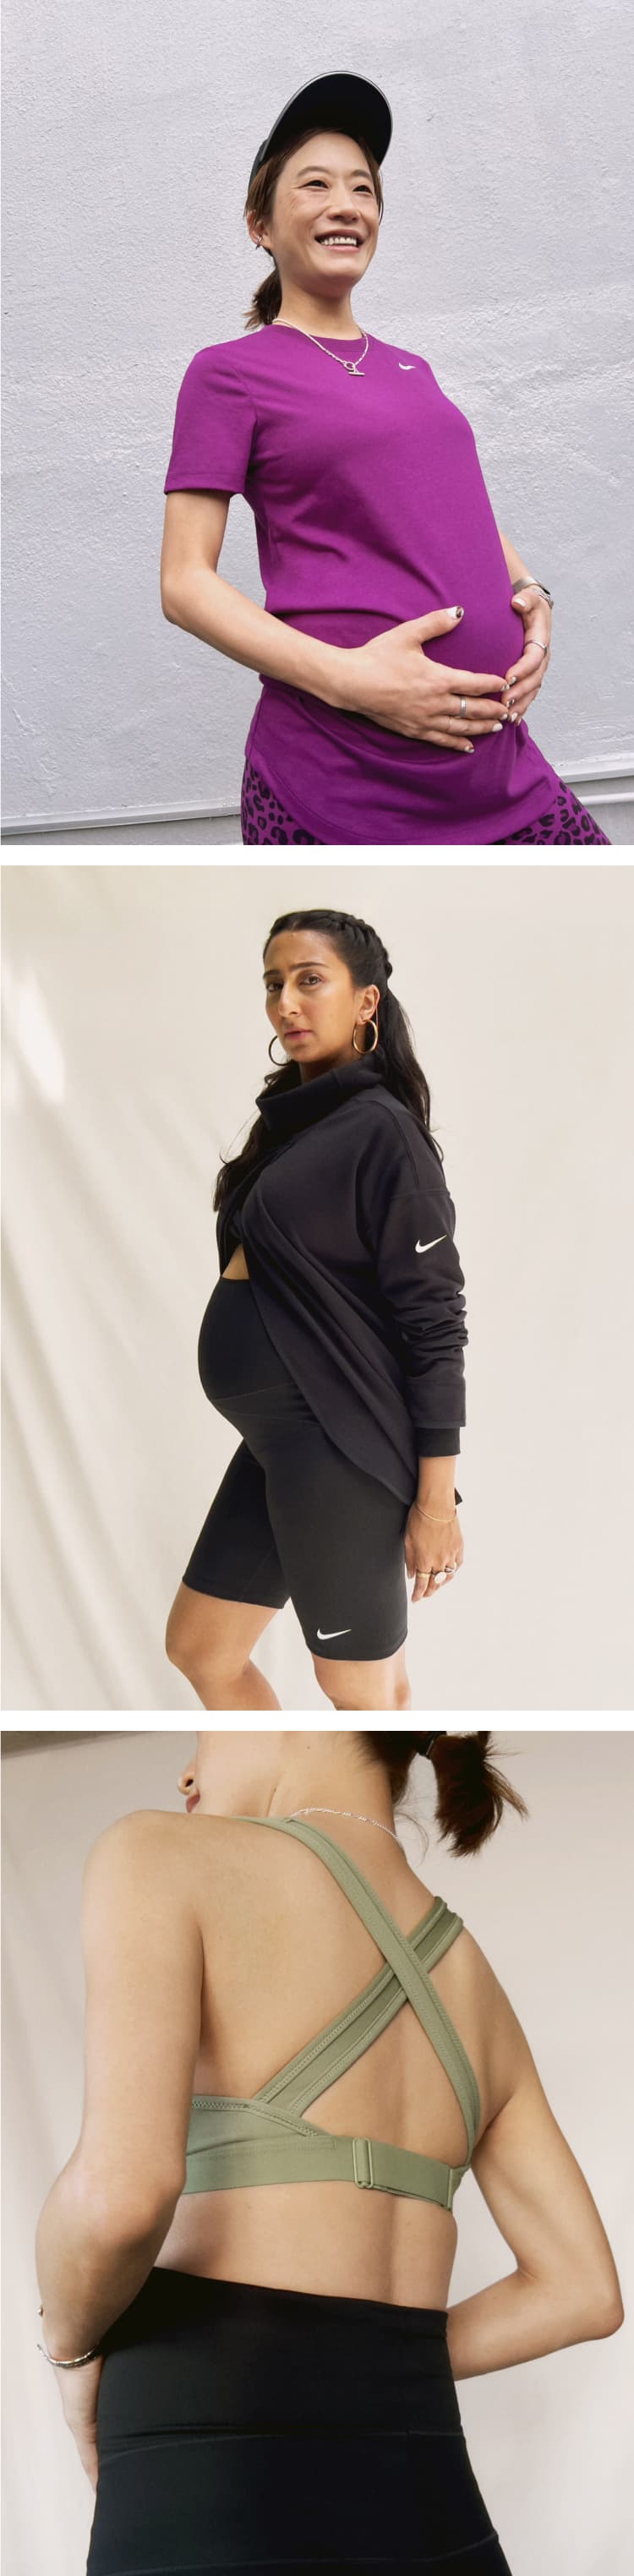 Nike Maternity Outfit Ideas. Nike RO